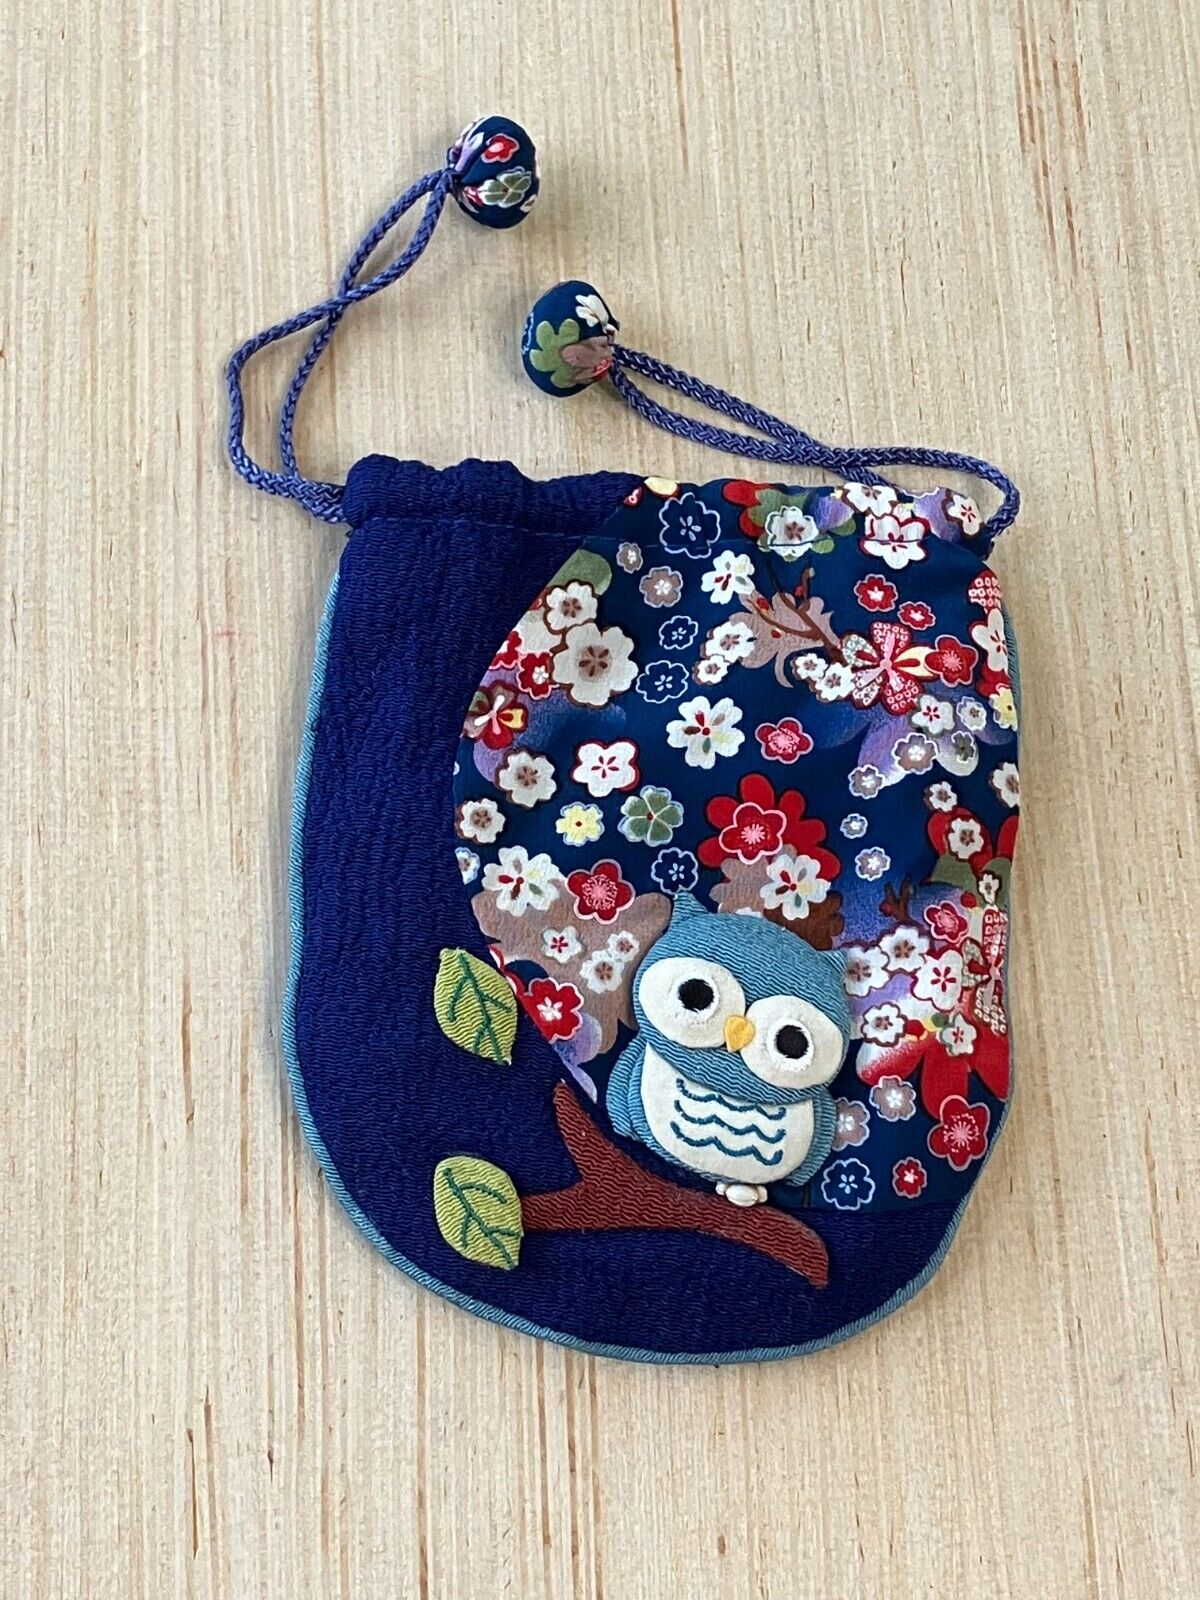 Vintage Silk Drawstring Bag - Handmade in Japan, 3D Owl Applique, Petite & Cute